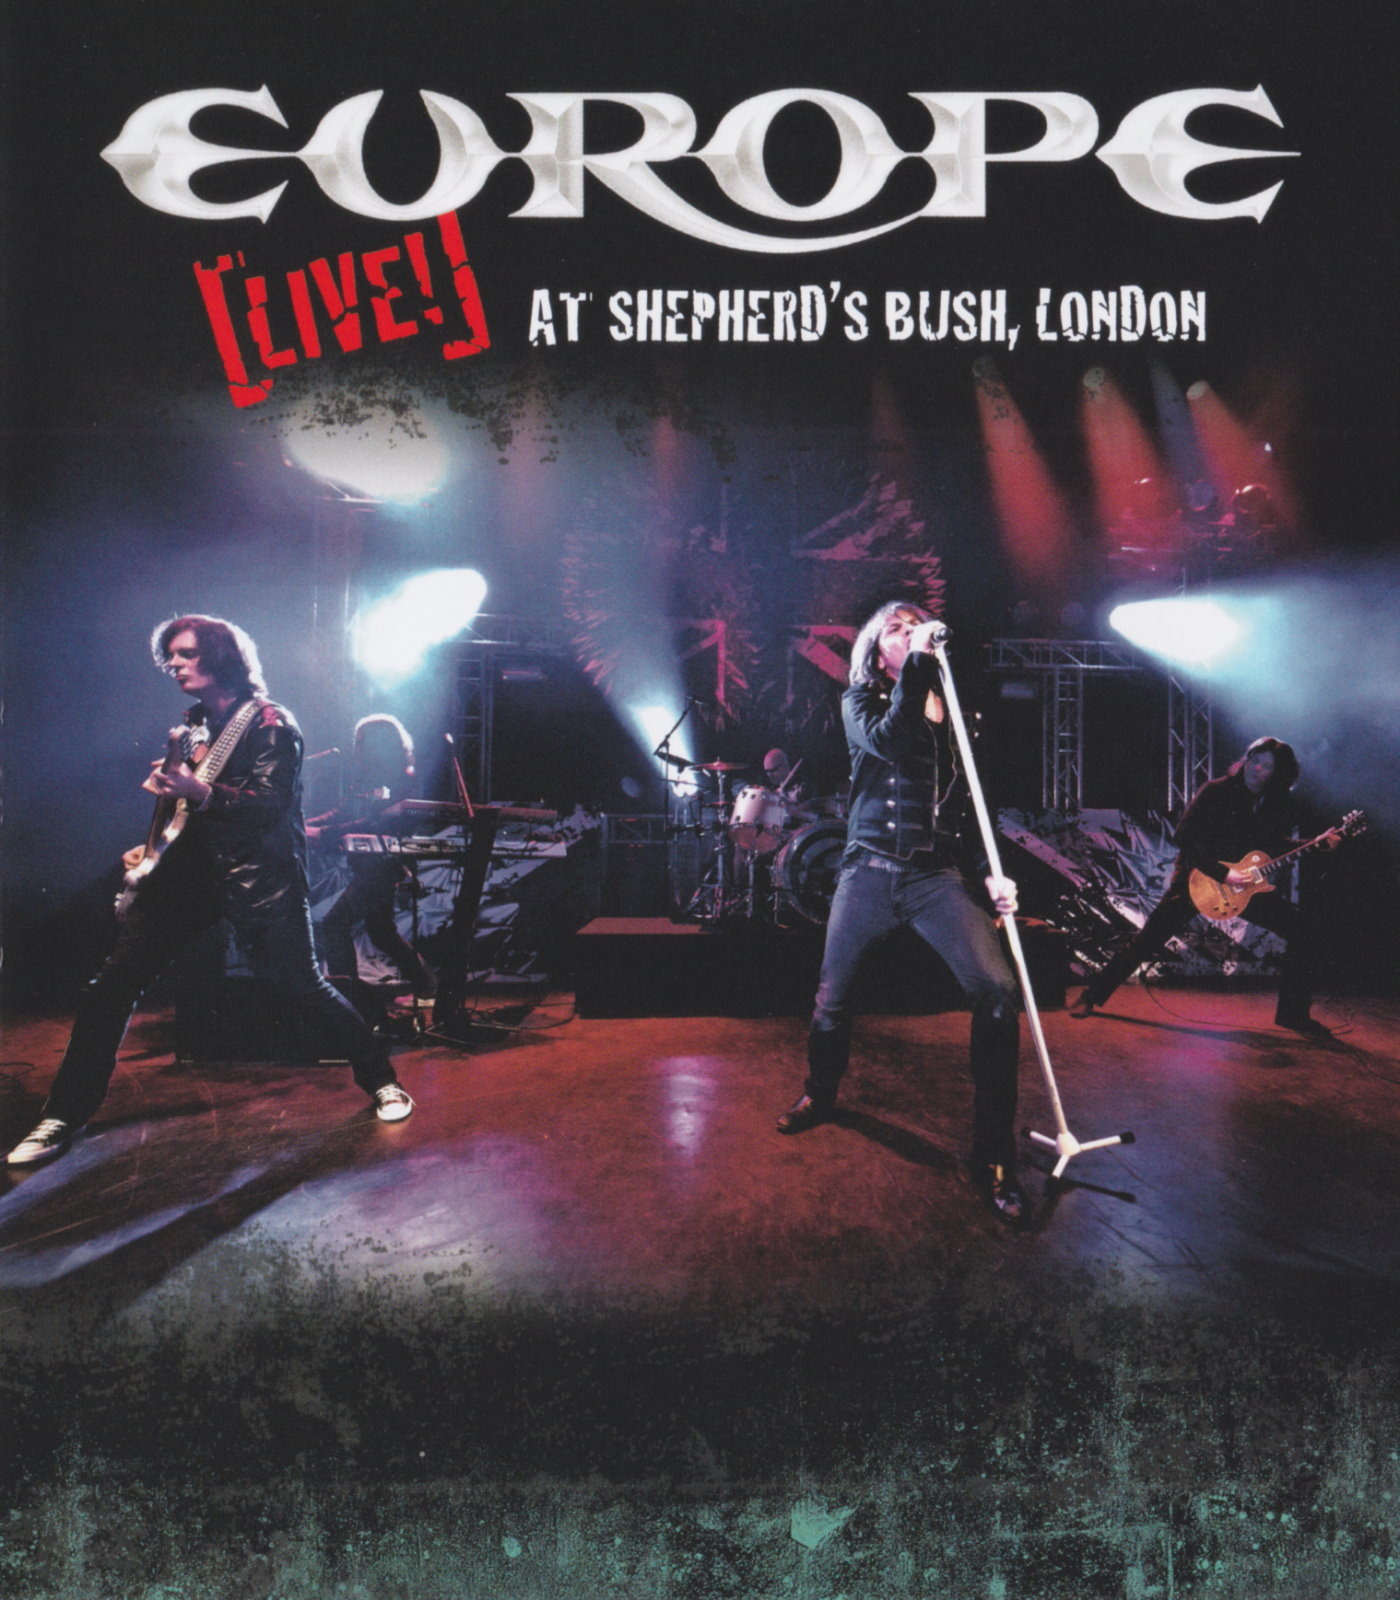 Cover - Europe - Live at Shepherd's Bush, London.jpg